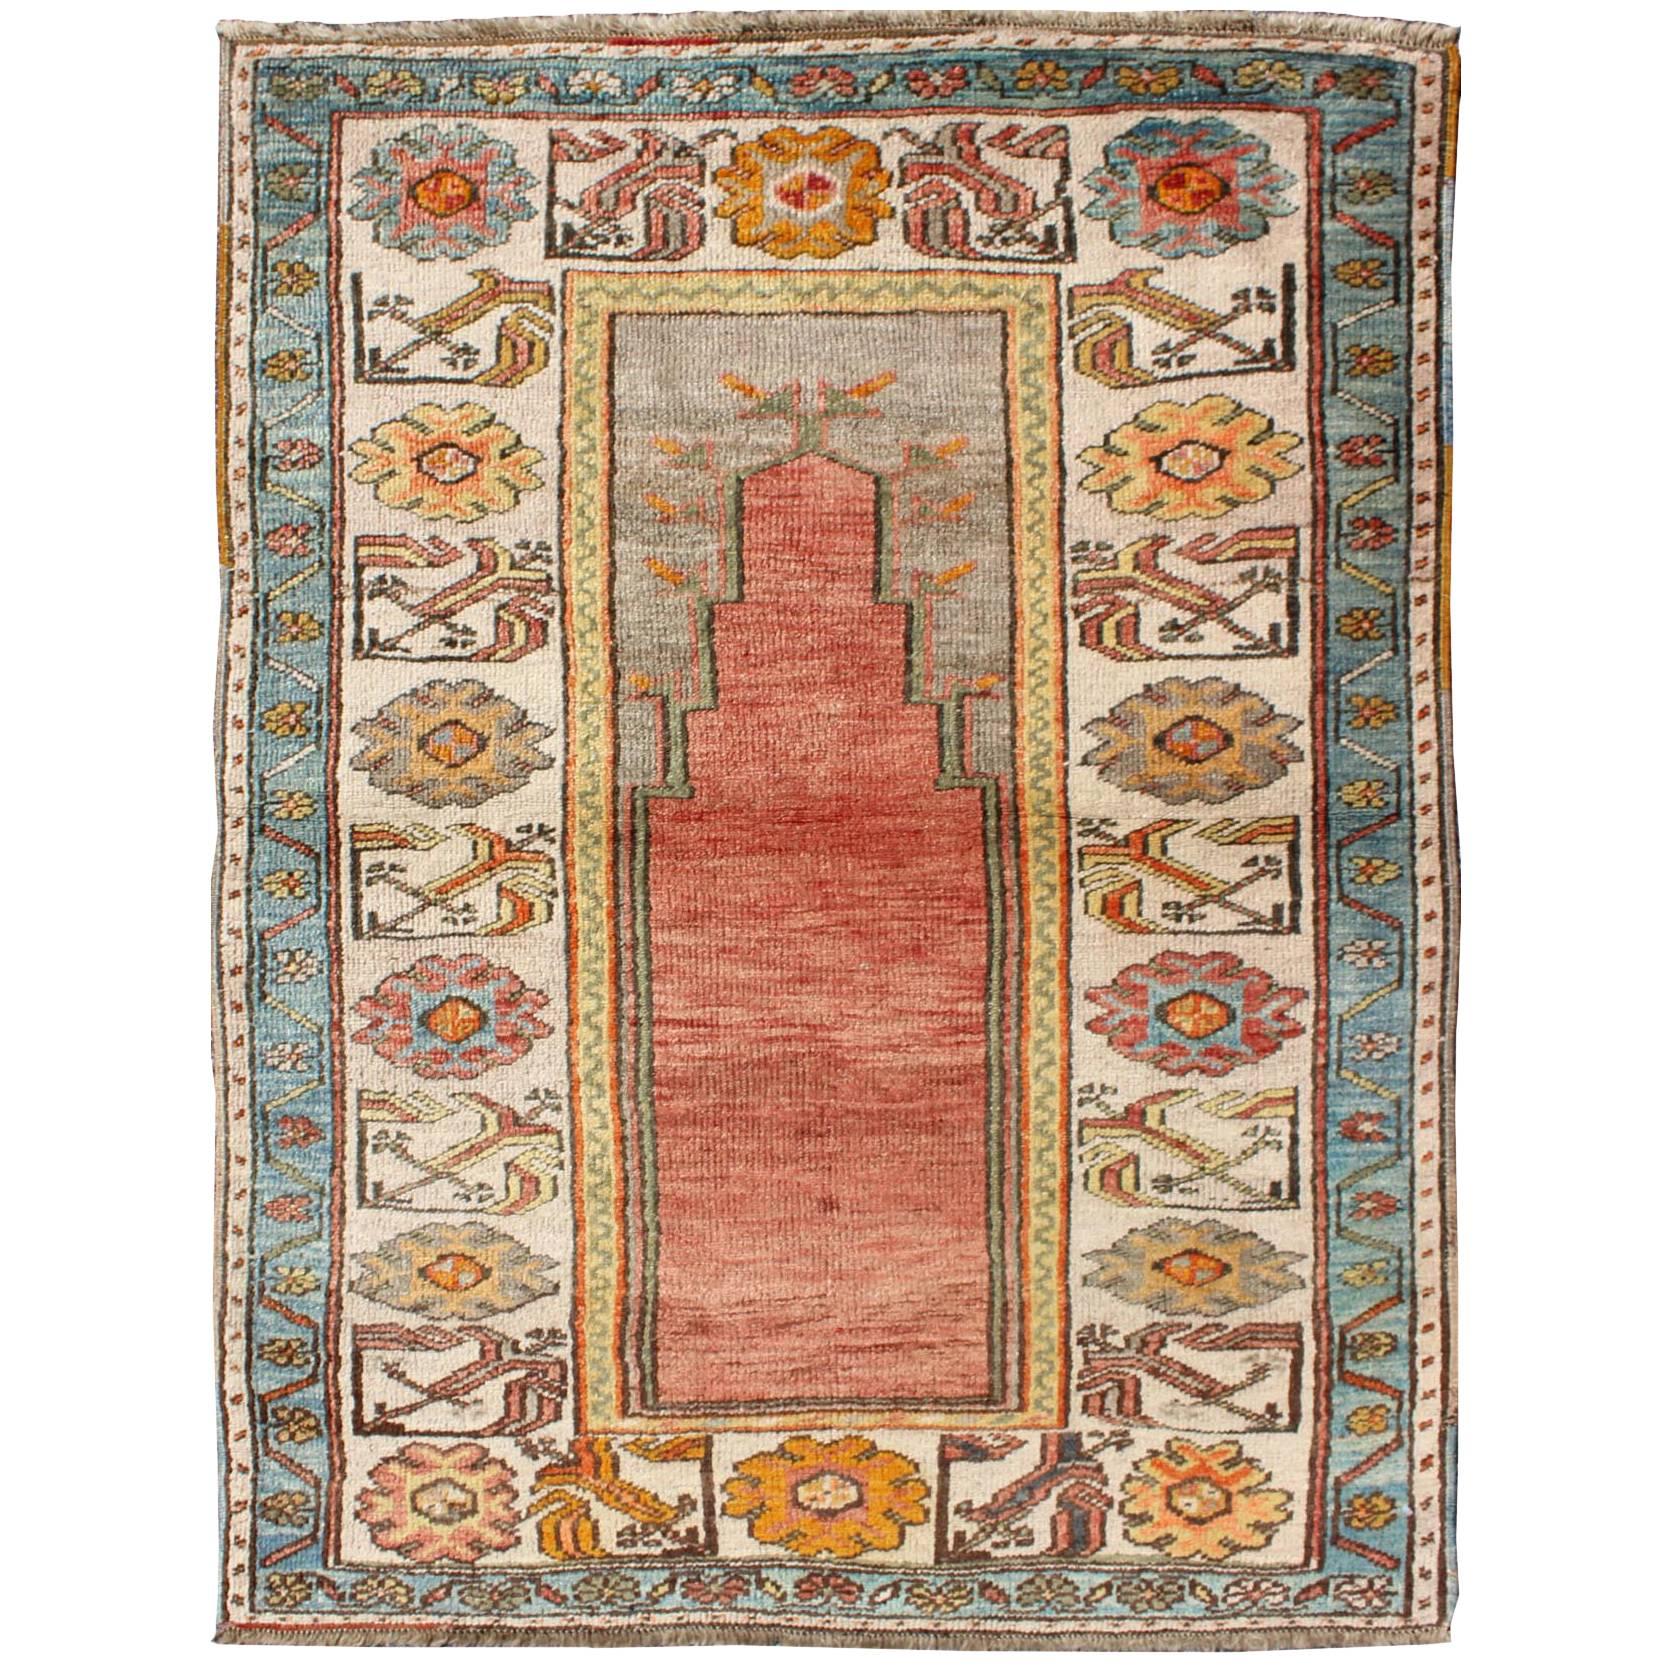 Antique Turkish Prayer Rug in Turquoise, Salmon, Orange, Blue and Ivory